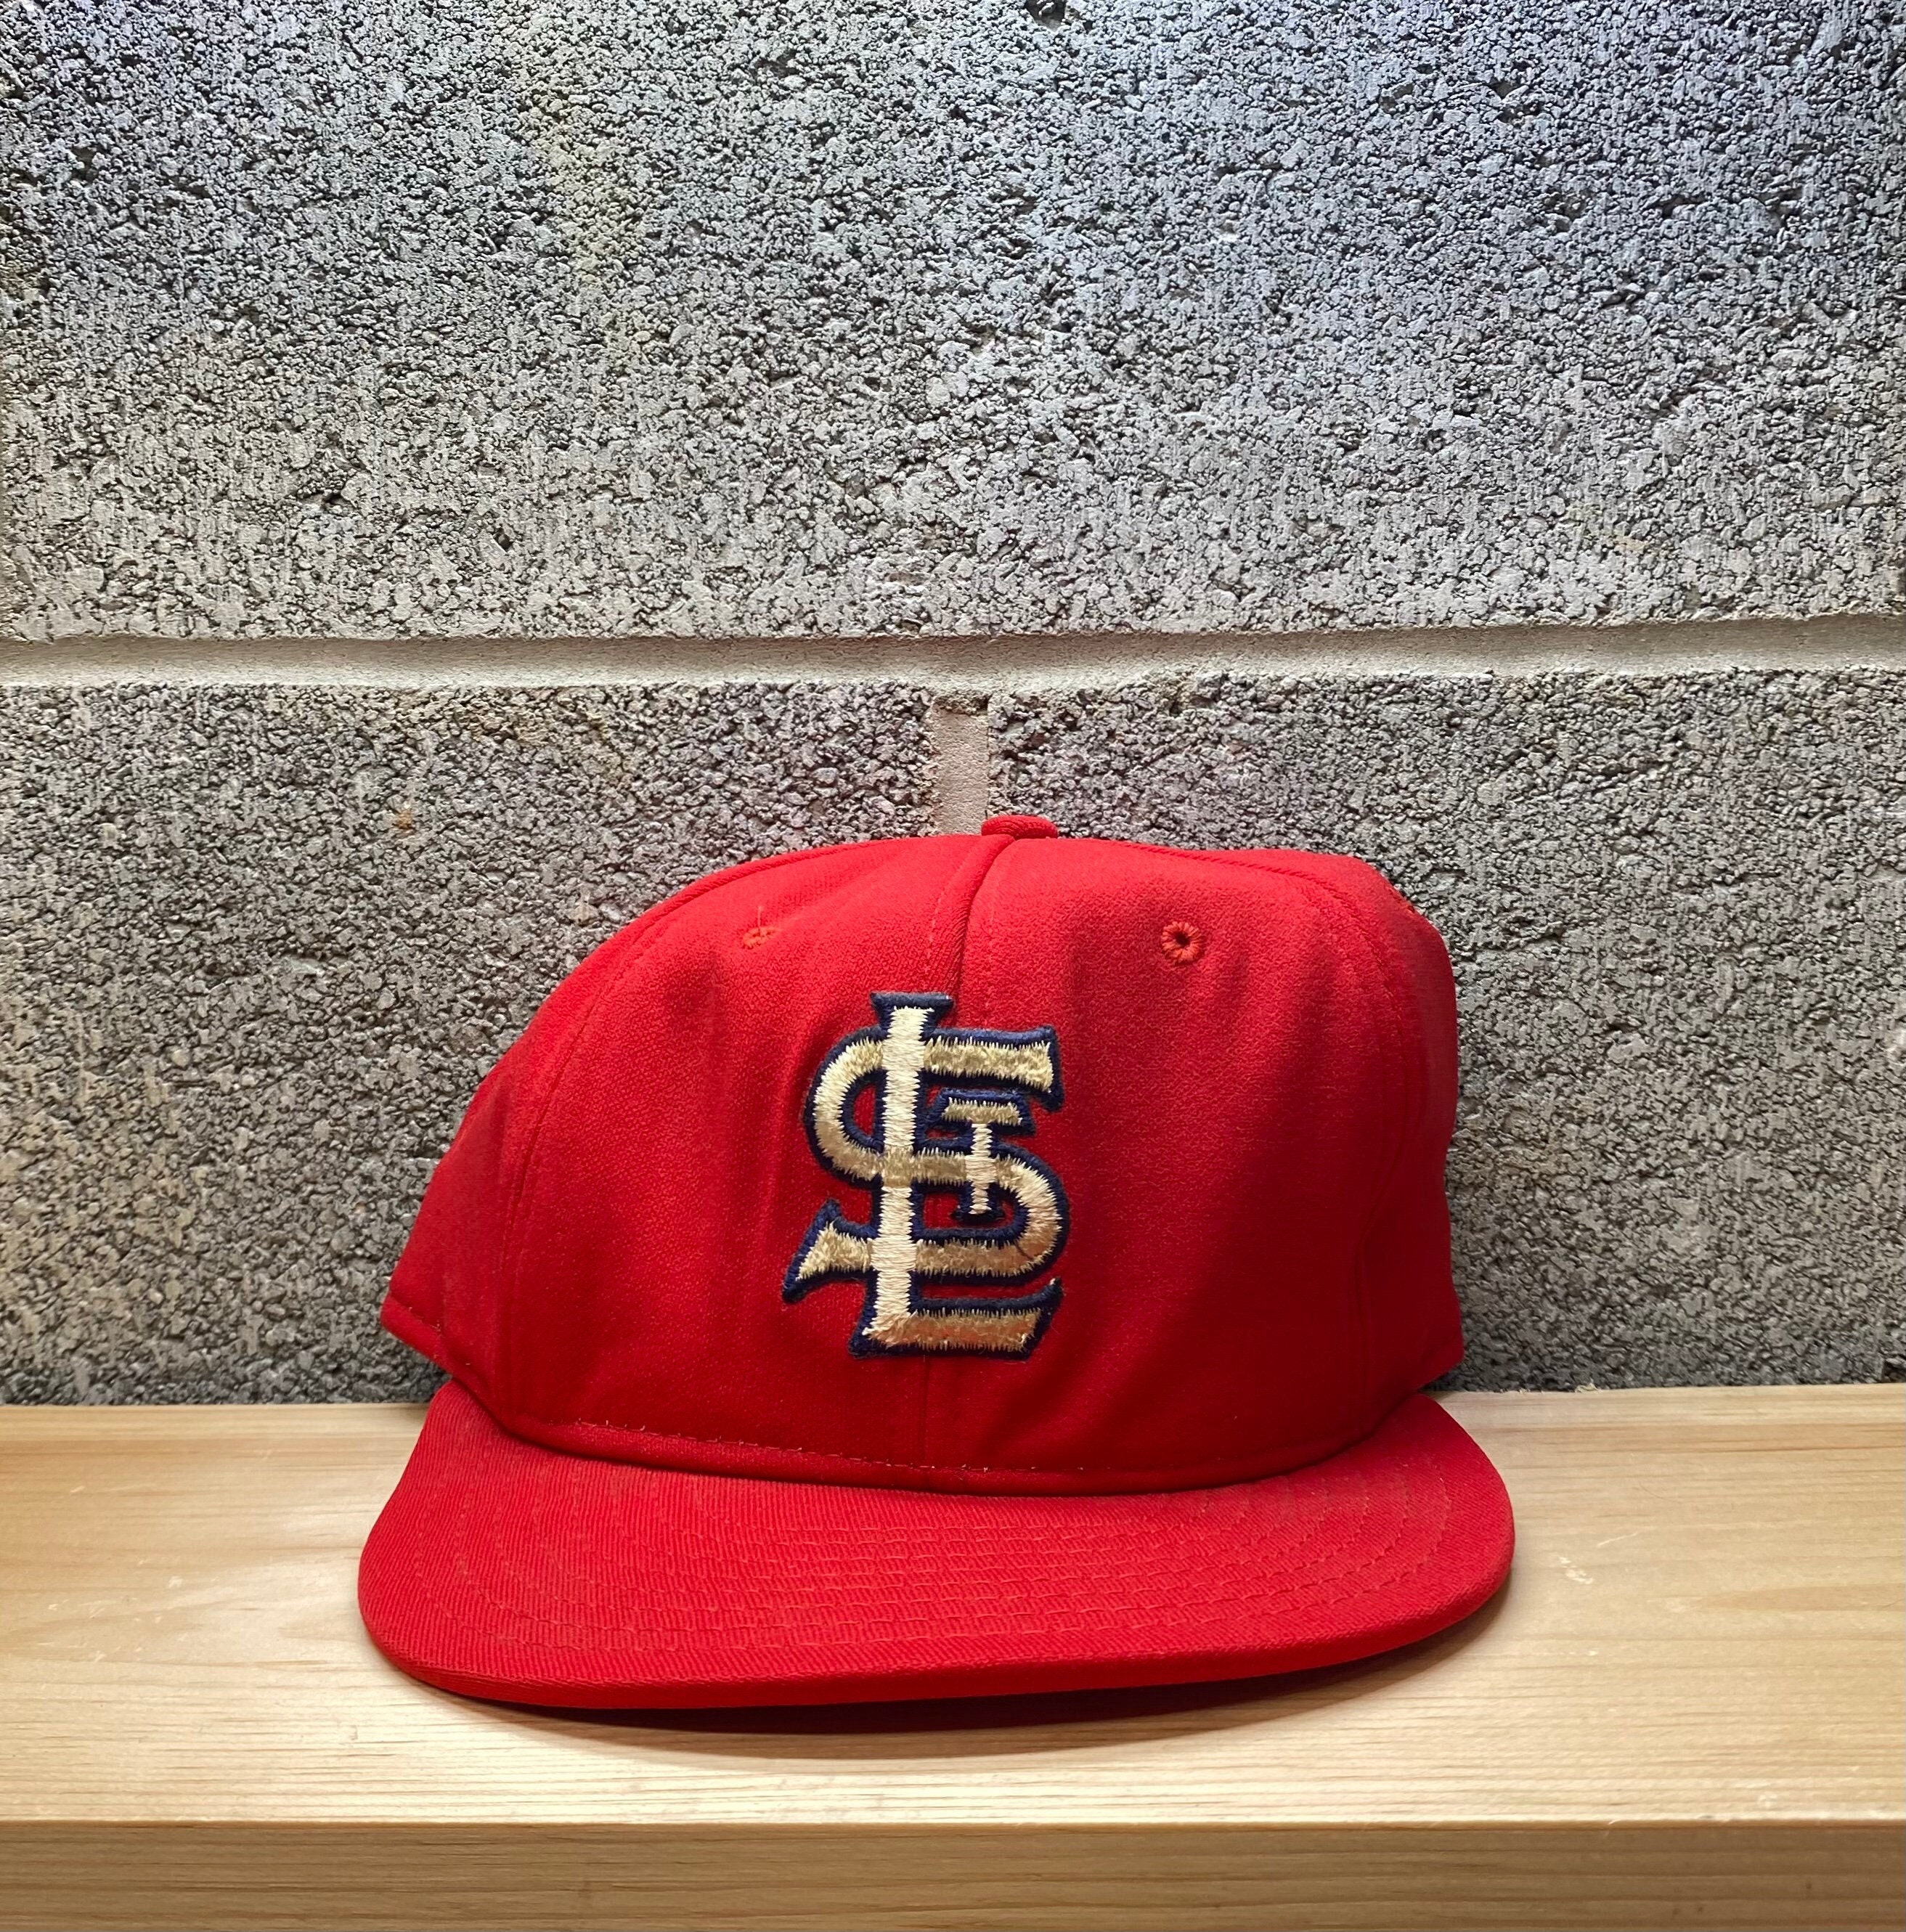 St. Louis Cardinals Vintage 1990s Baseball Hat